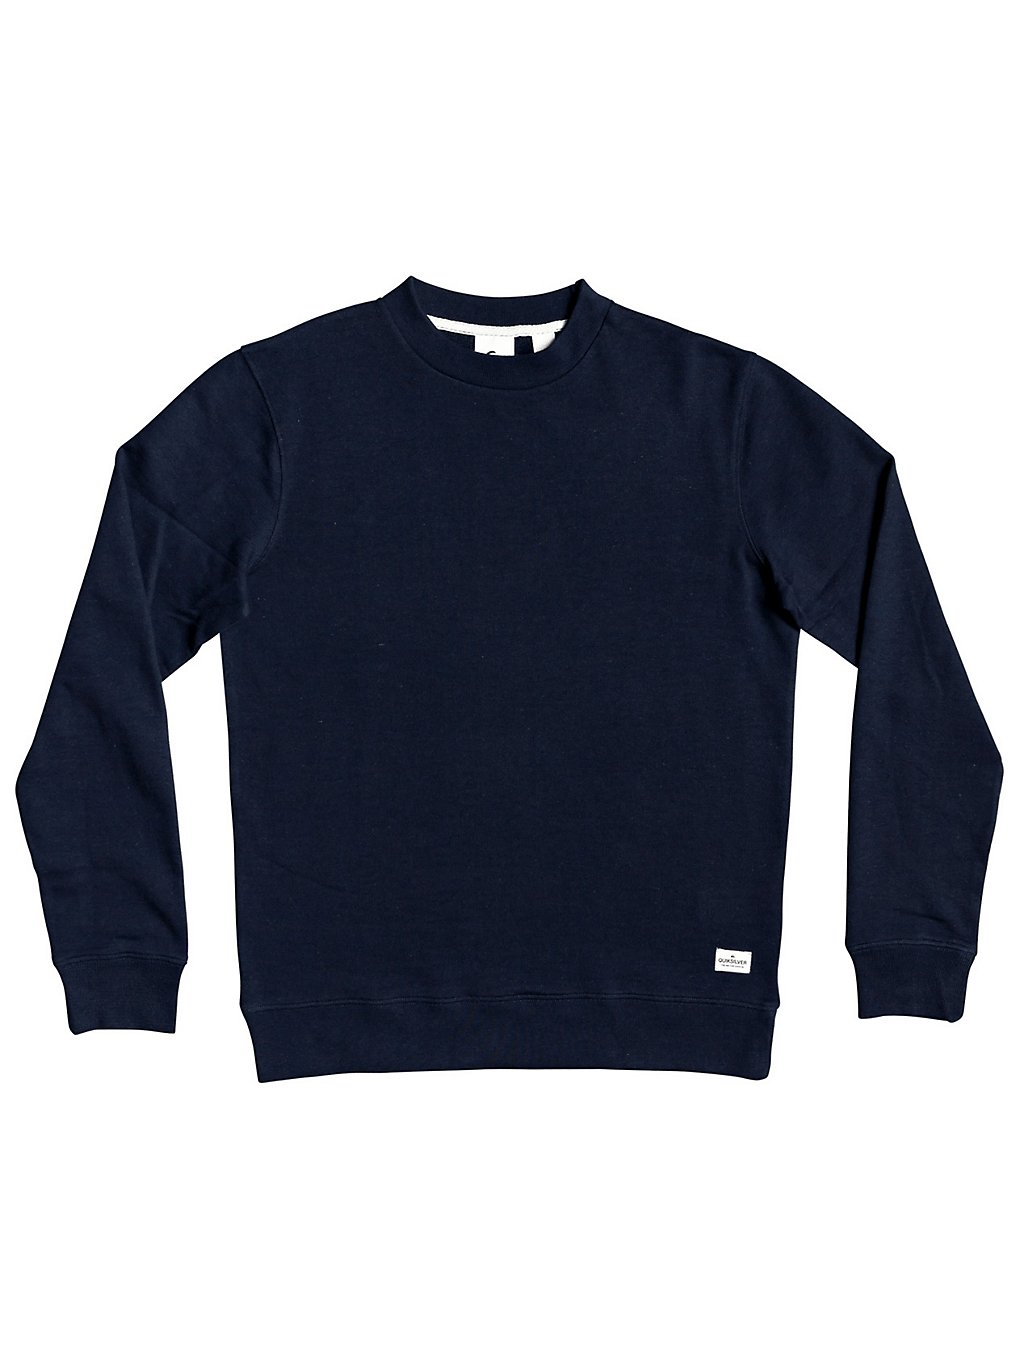 Quiksilver Essentials Crew Terry Sweater navy blazer